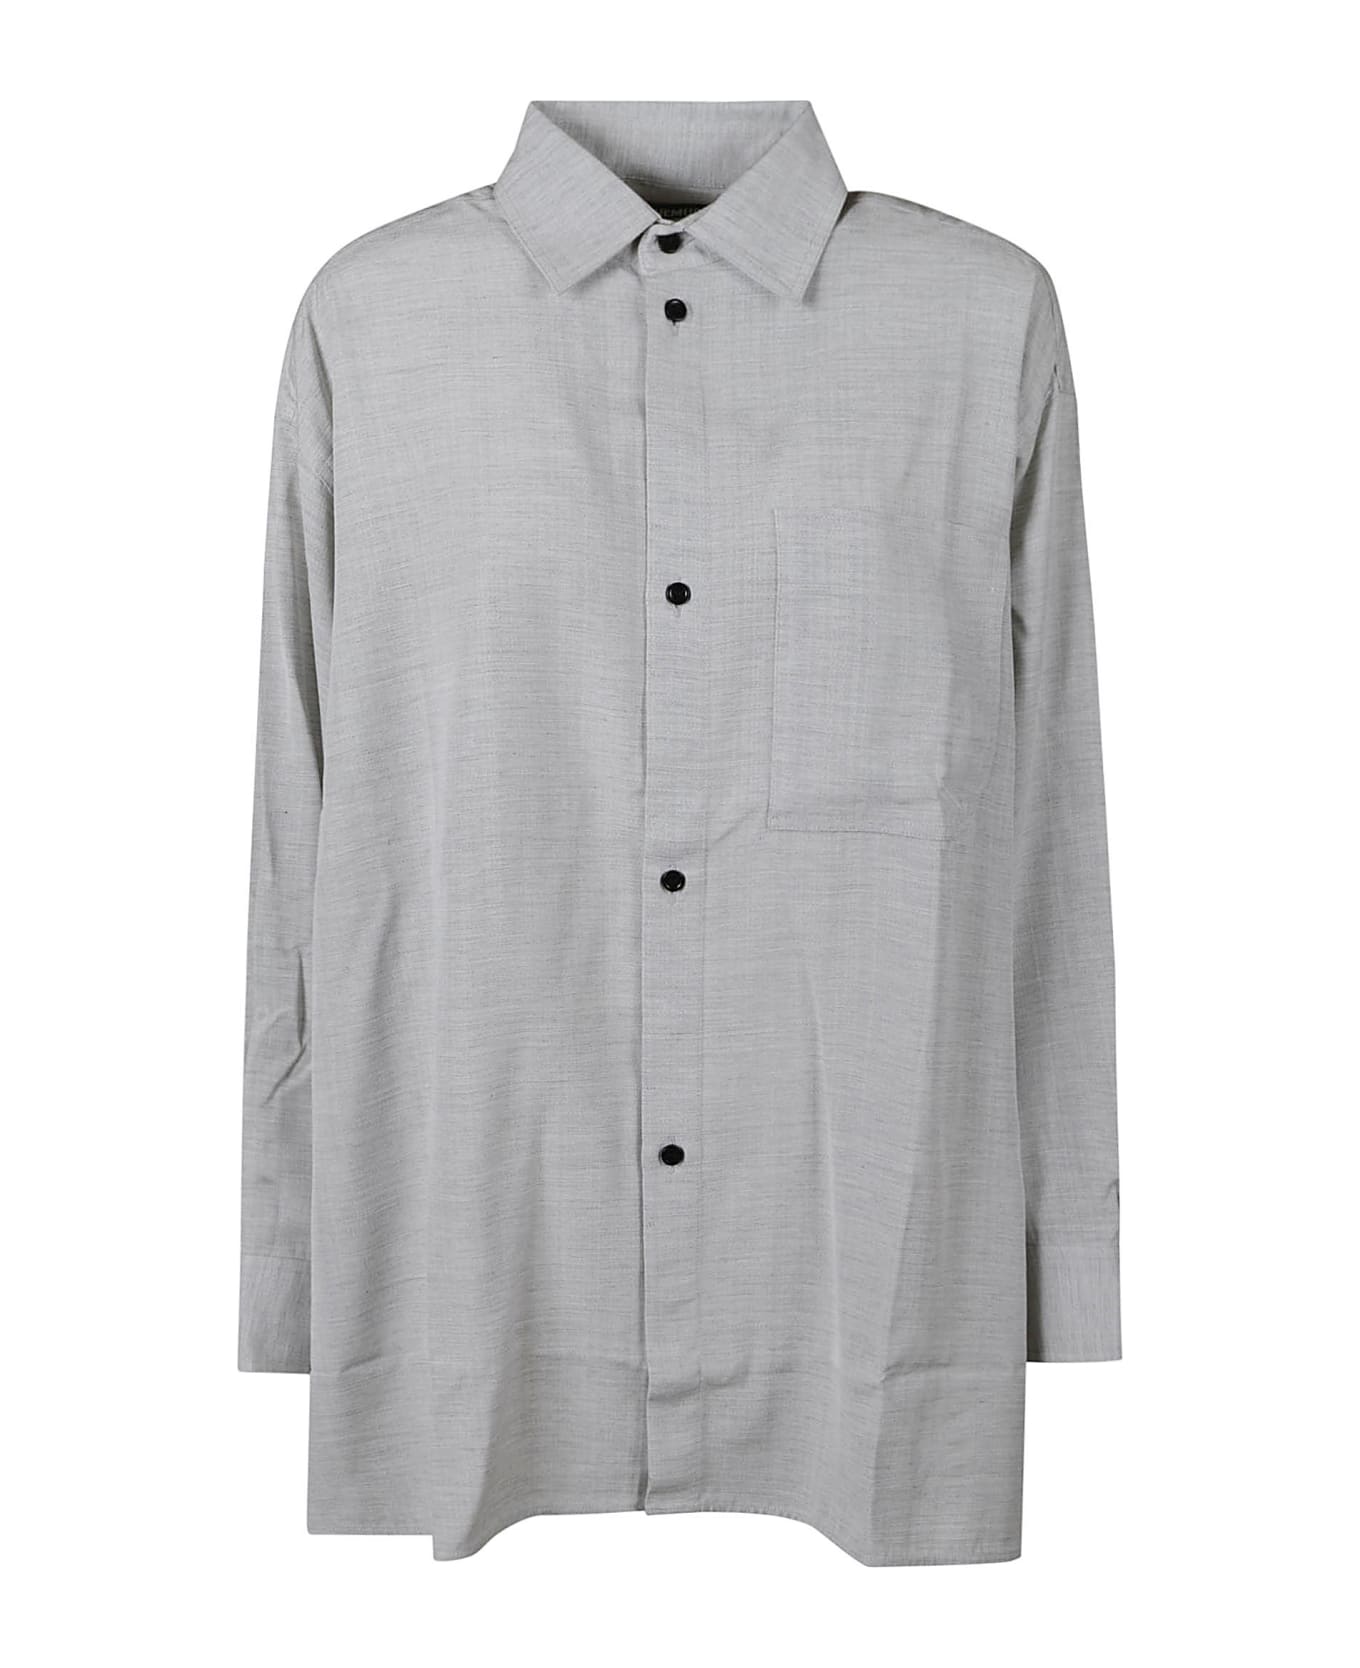 Jacquemus Patched Pocket Plain Shirt - Light Grey